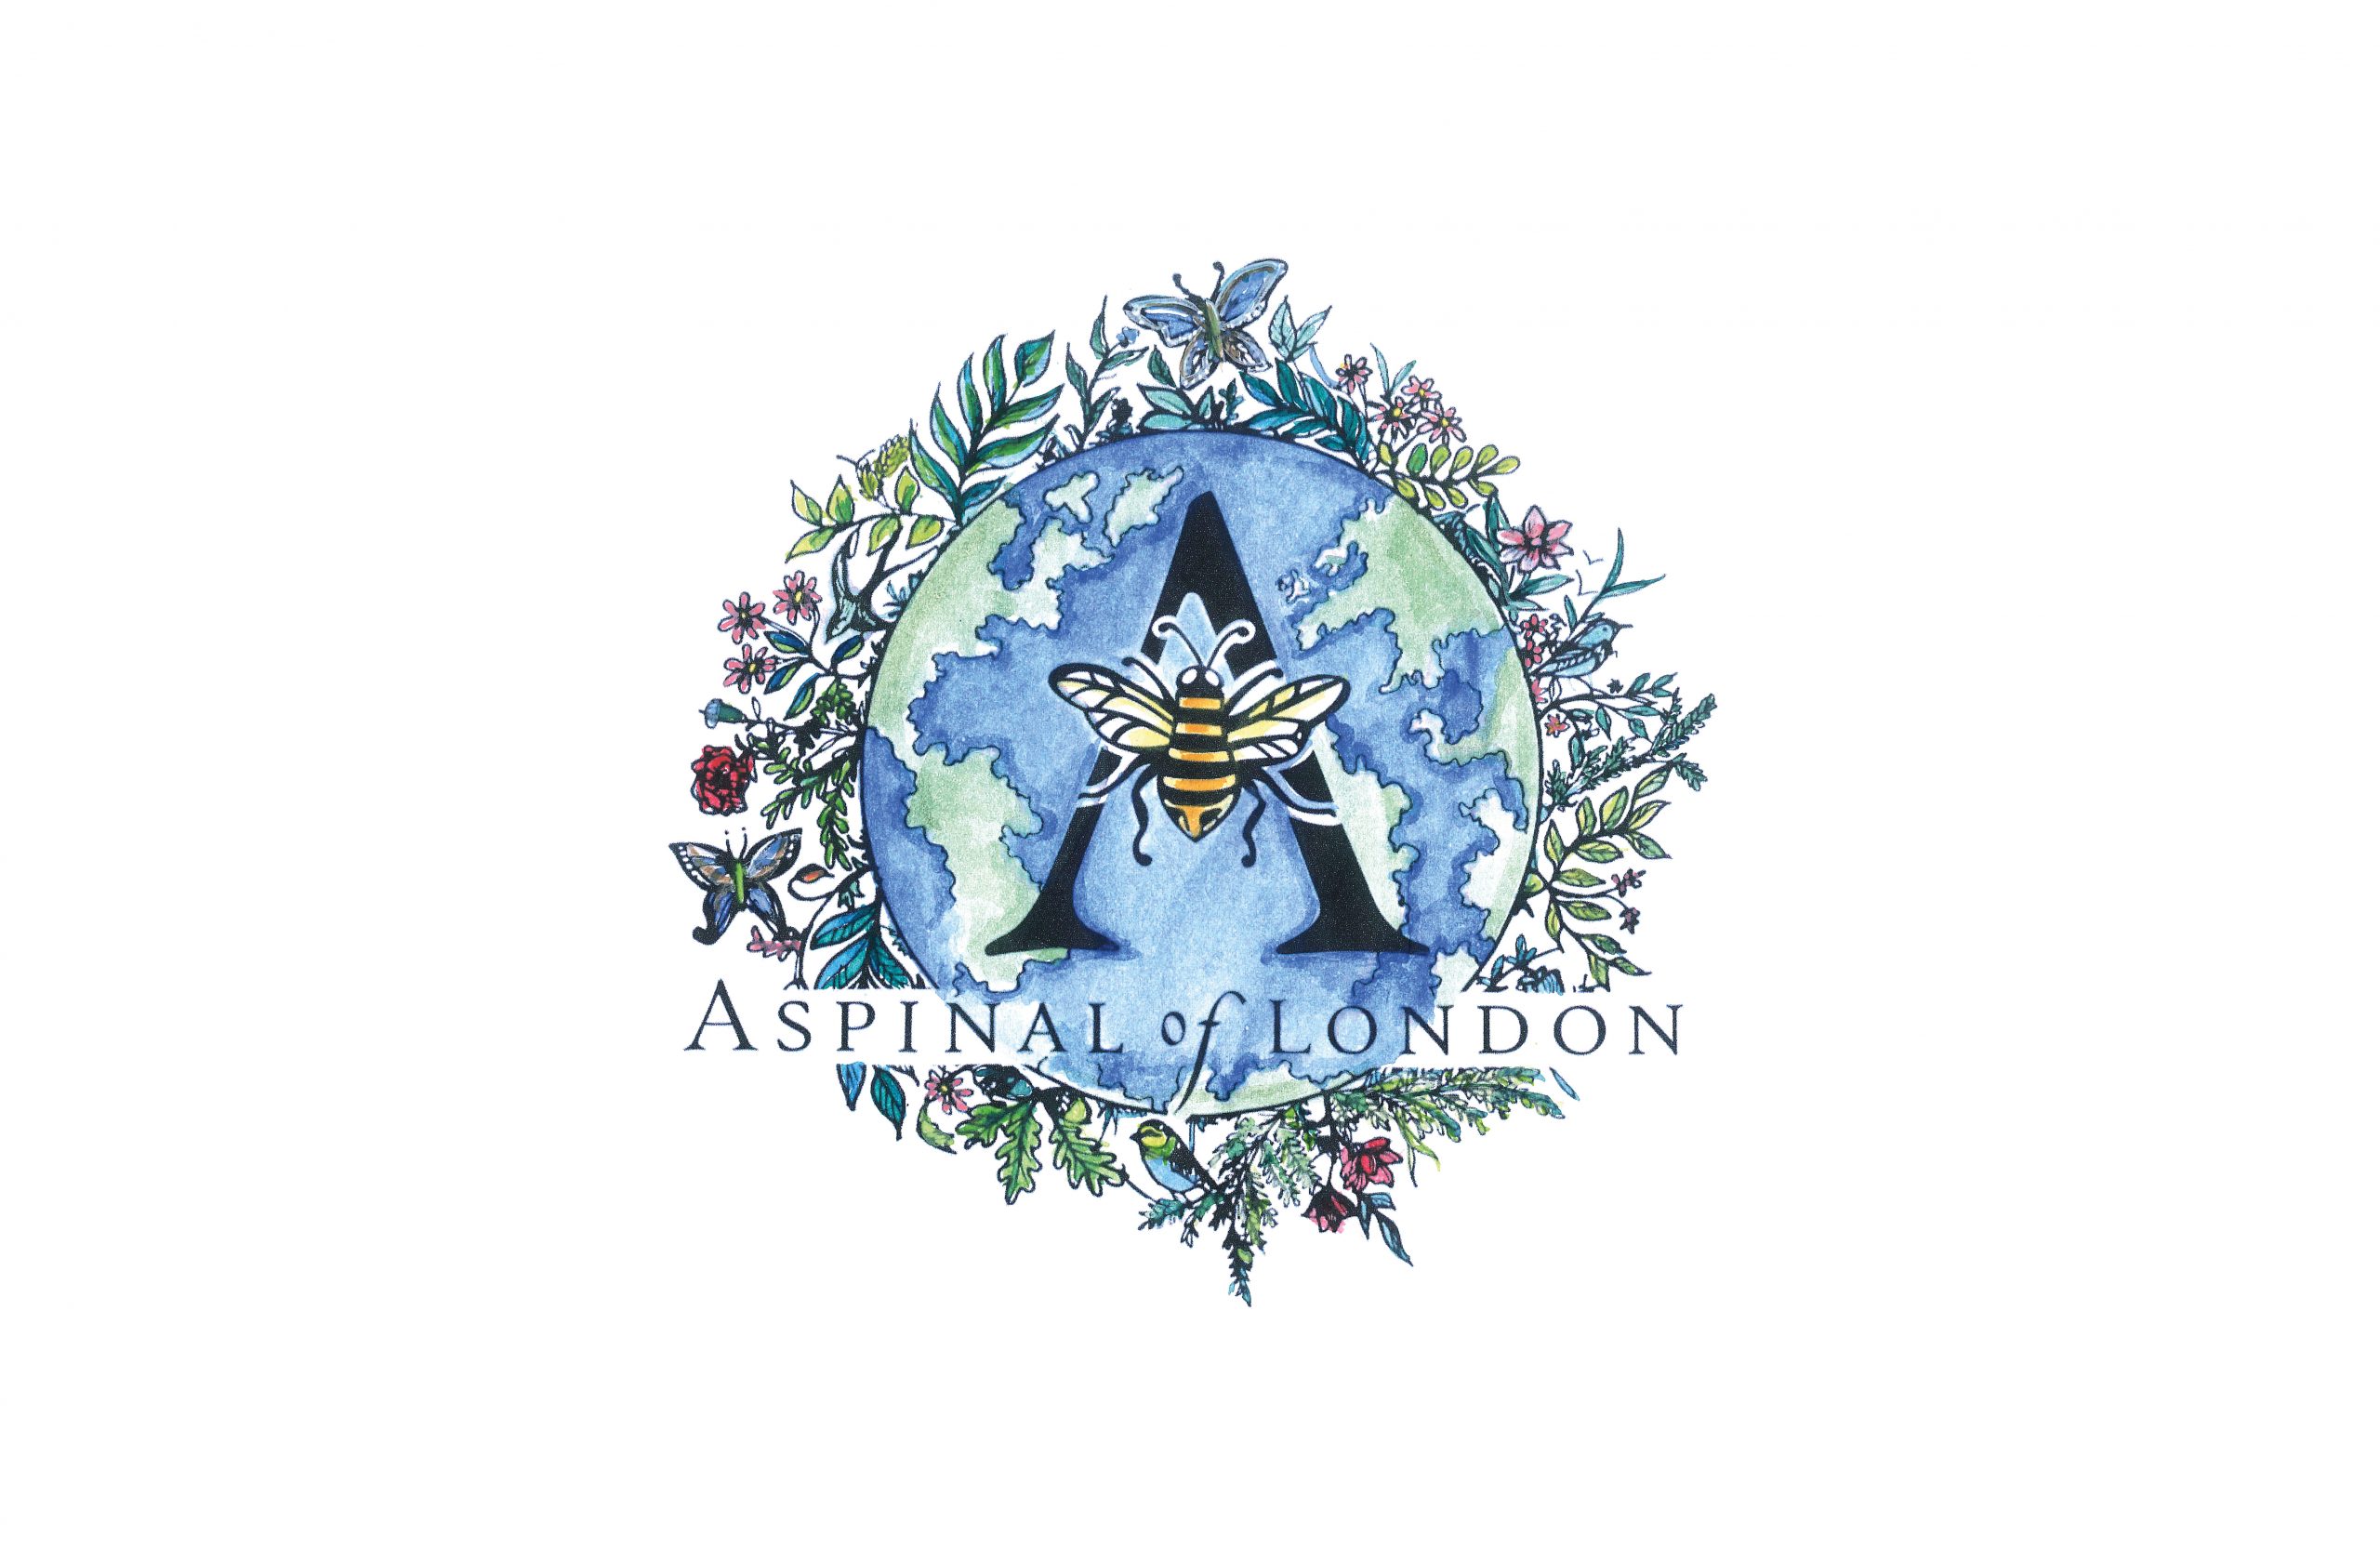 Bee Aspinal image for blog on sustainable eyewear